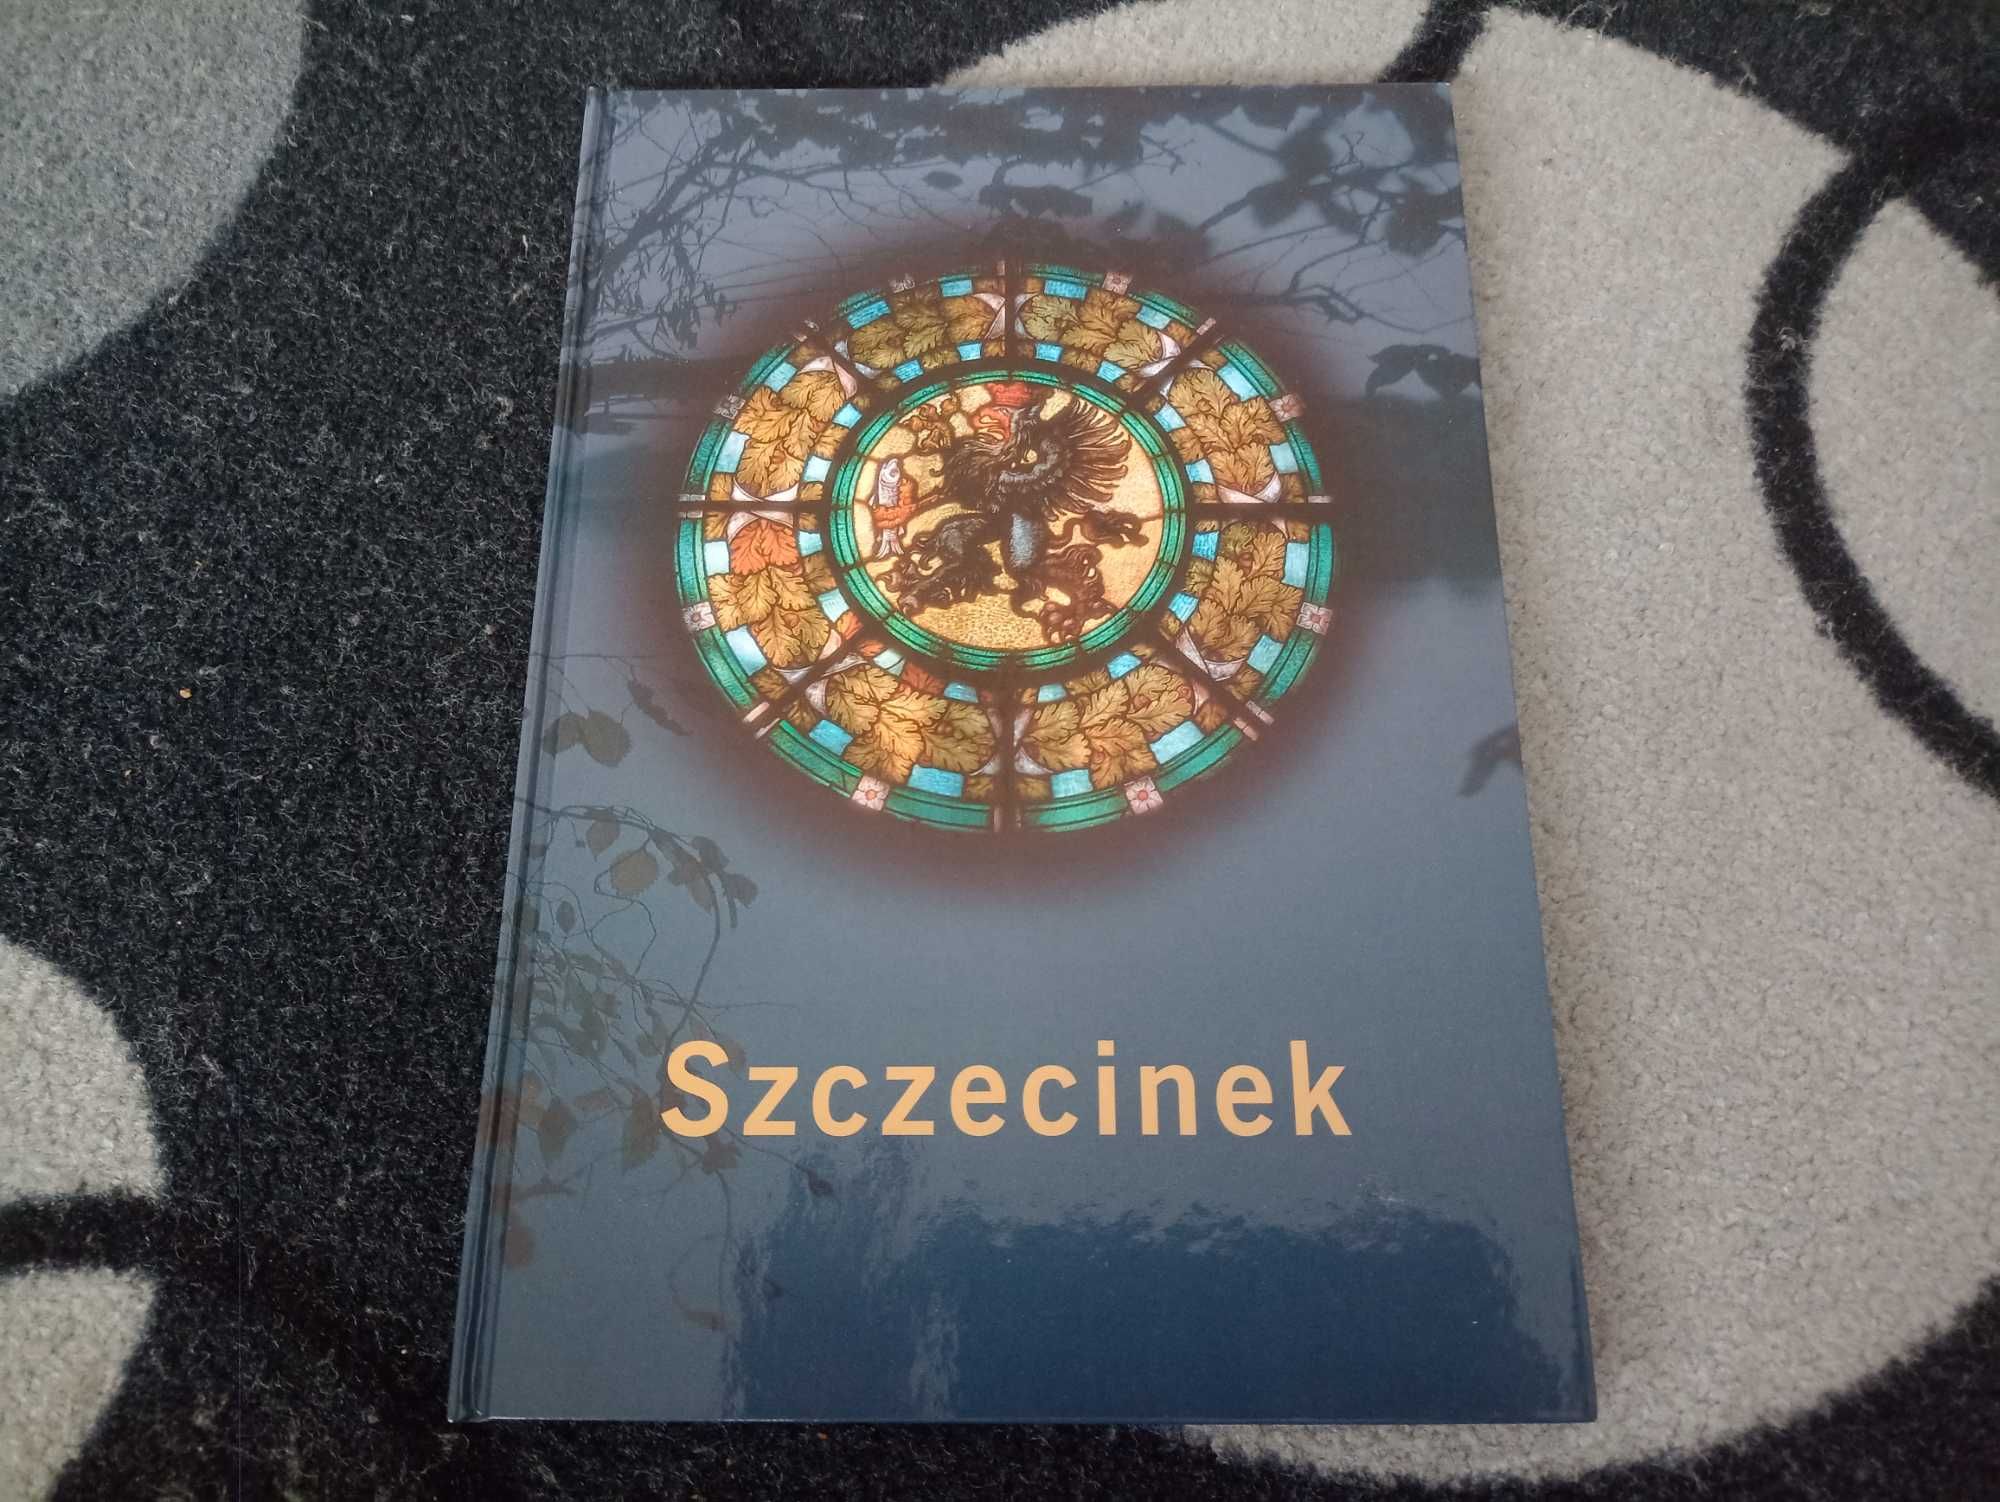 Szczecinek album